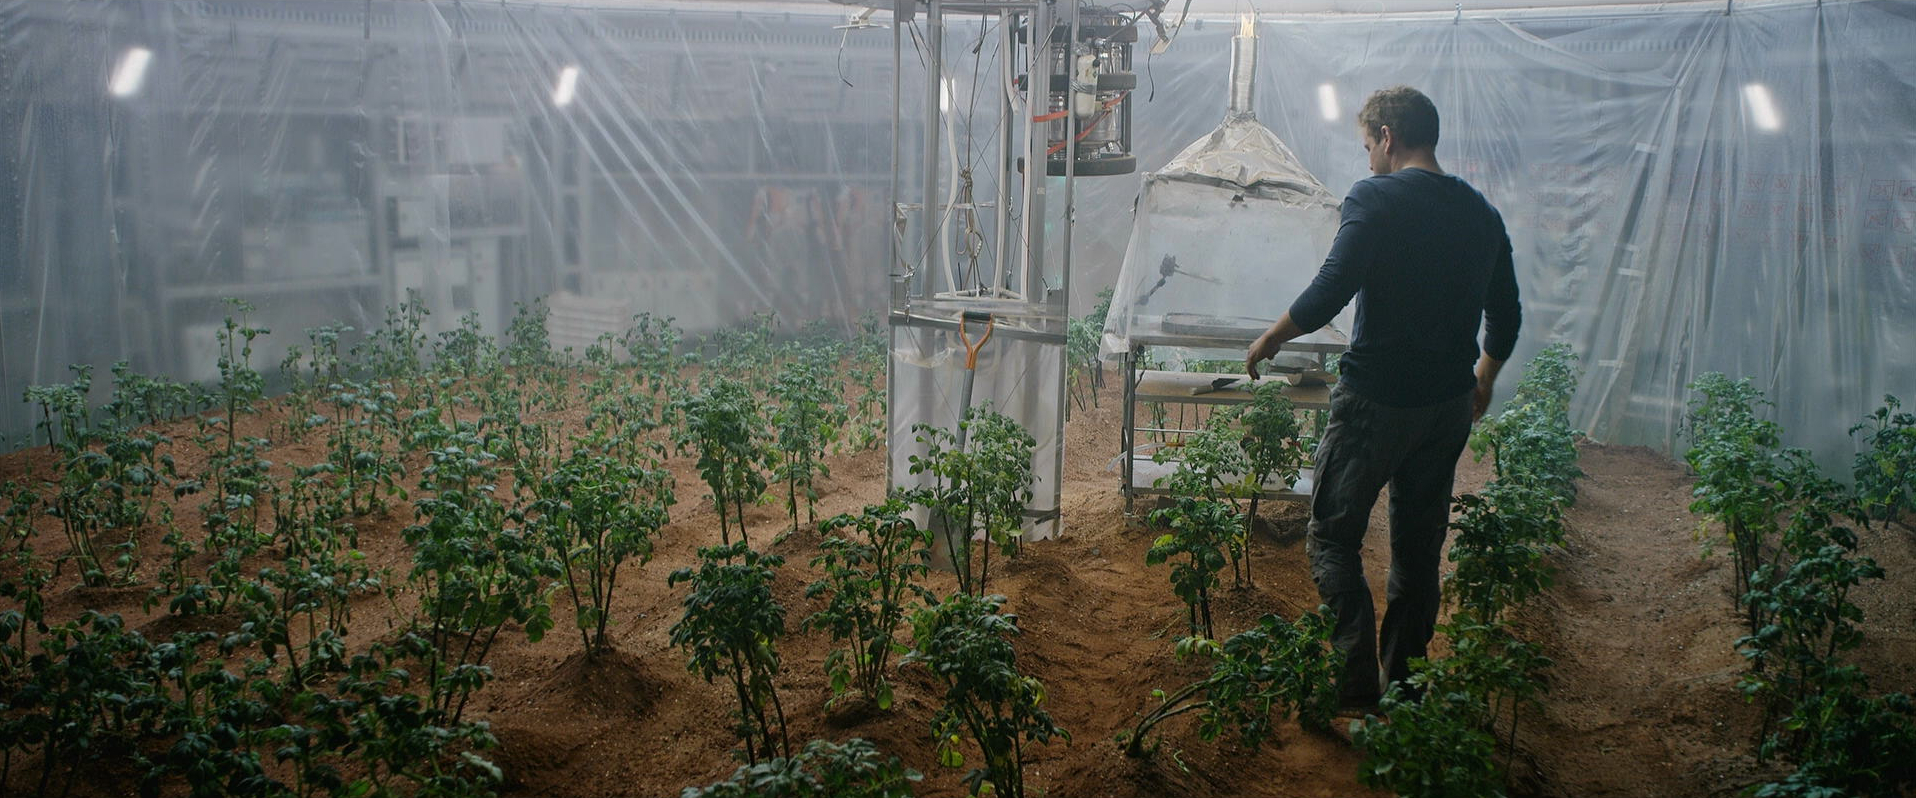 The Martian - Ridley Scott - Matt Damon - Mark Watney - potato crop - Mars